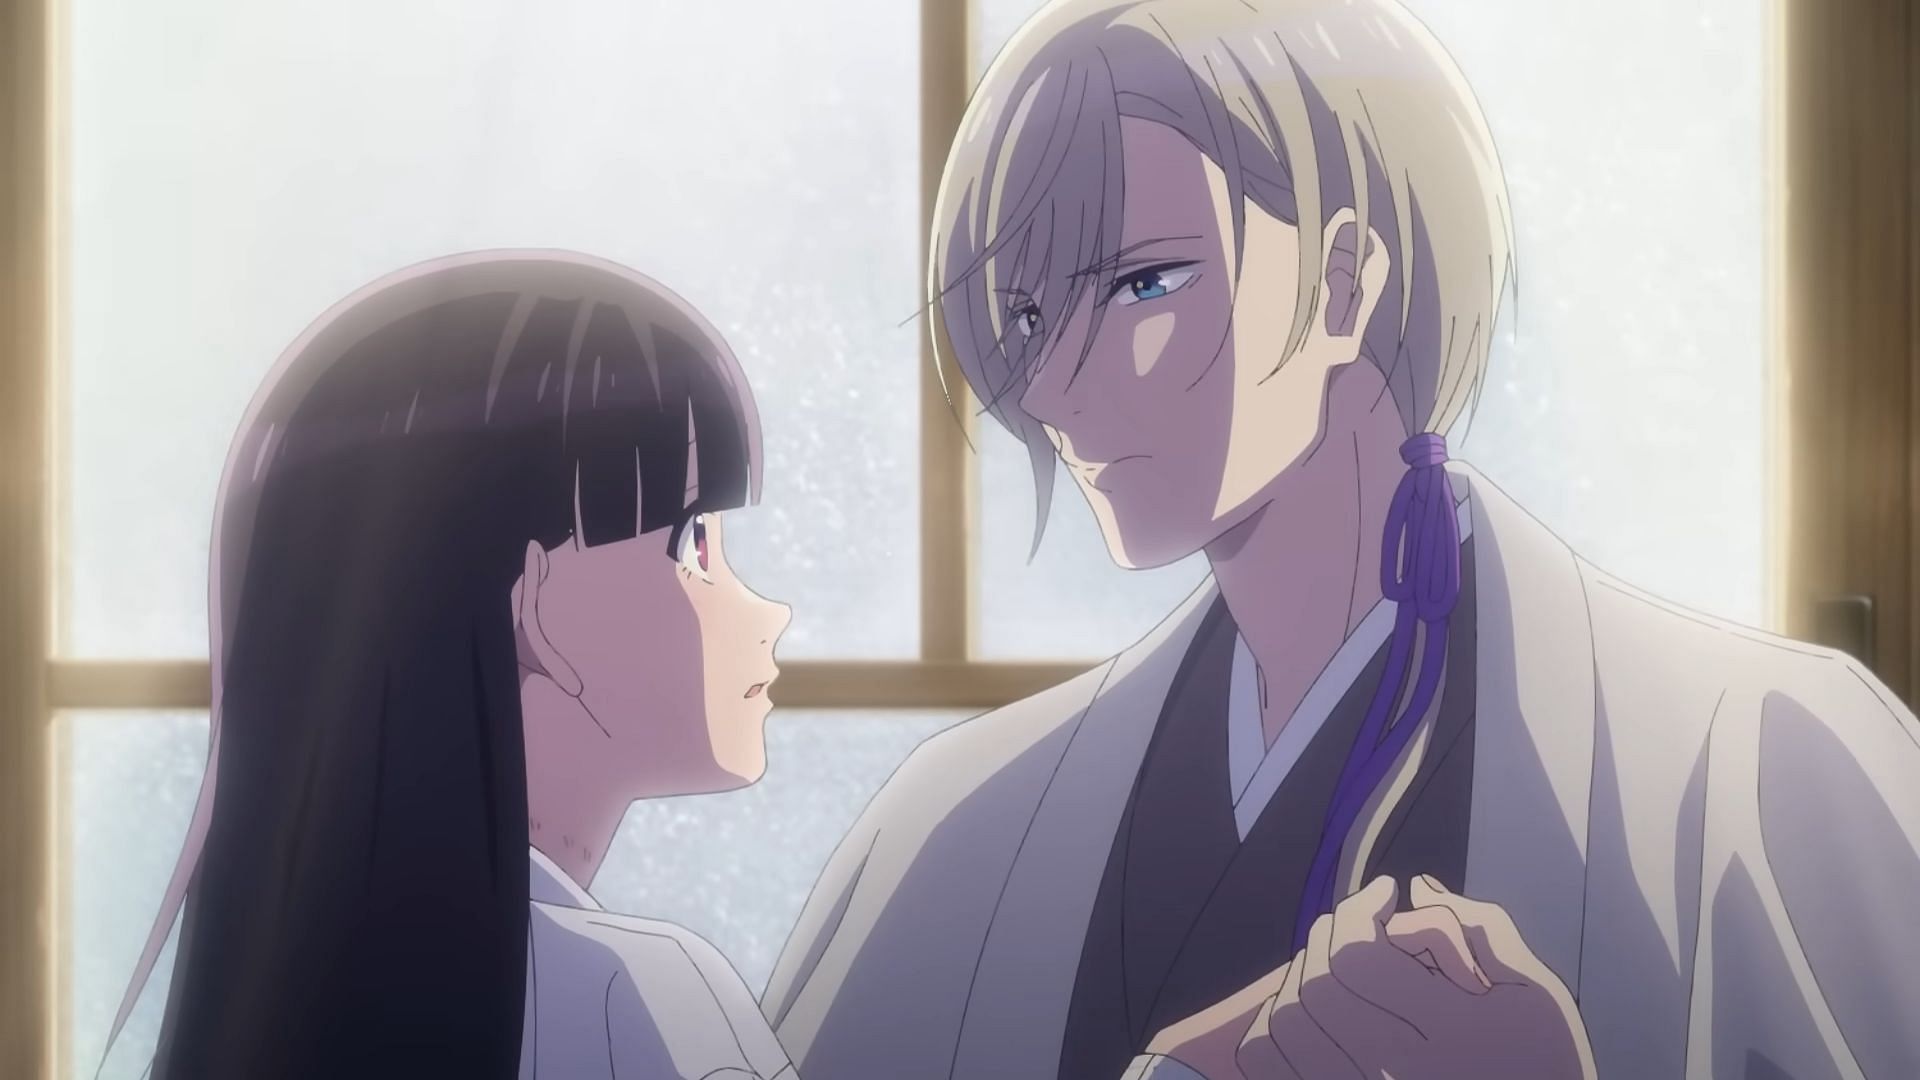 Miyo and Kiyoka in the My Happy Marriage anime trailer